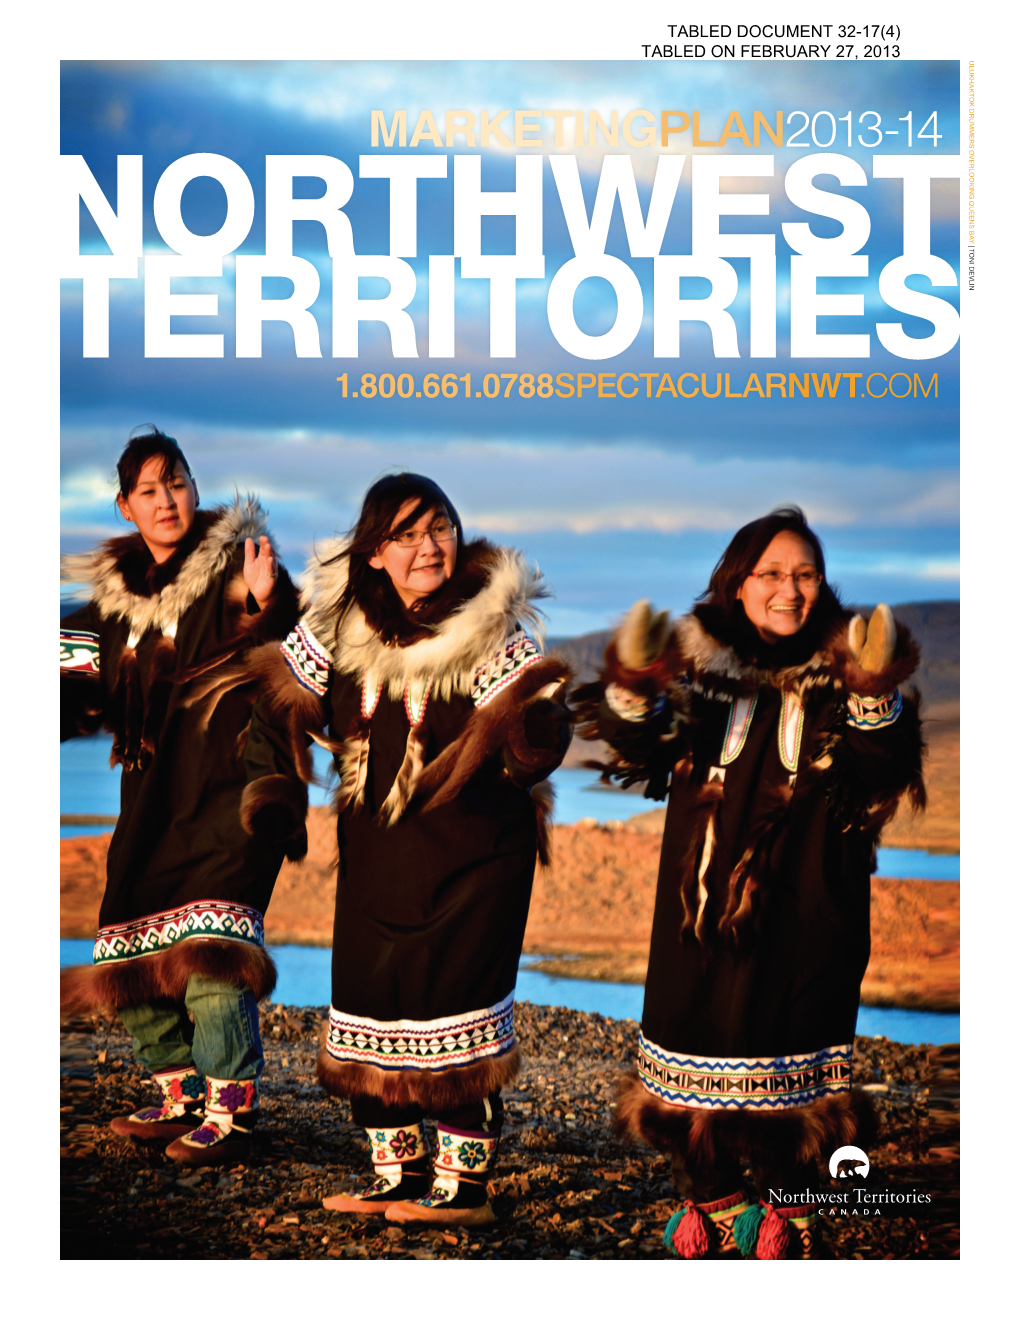 Northwest Territories Marketing Plan 2013-2014